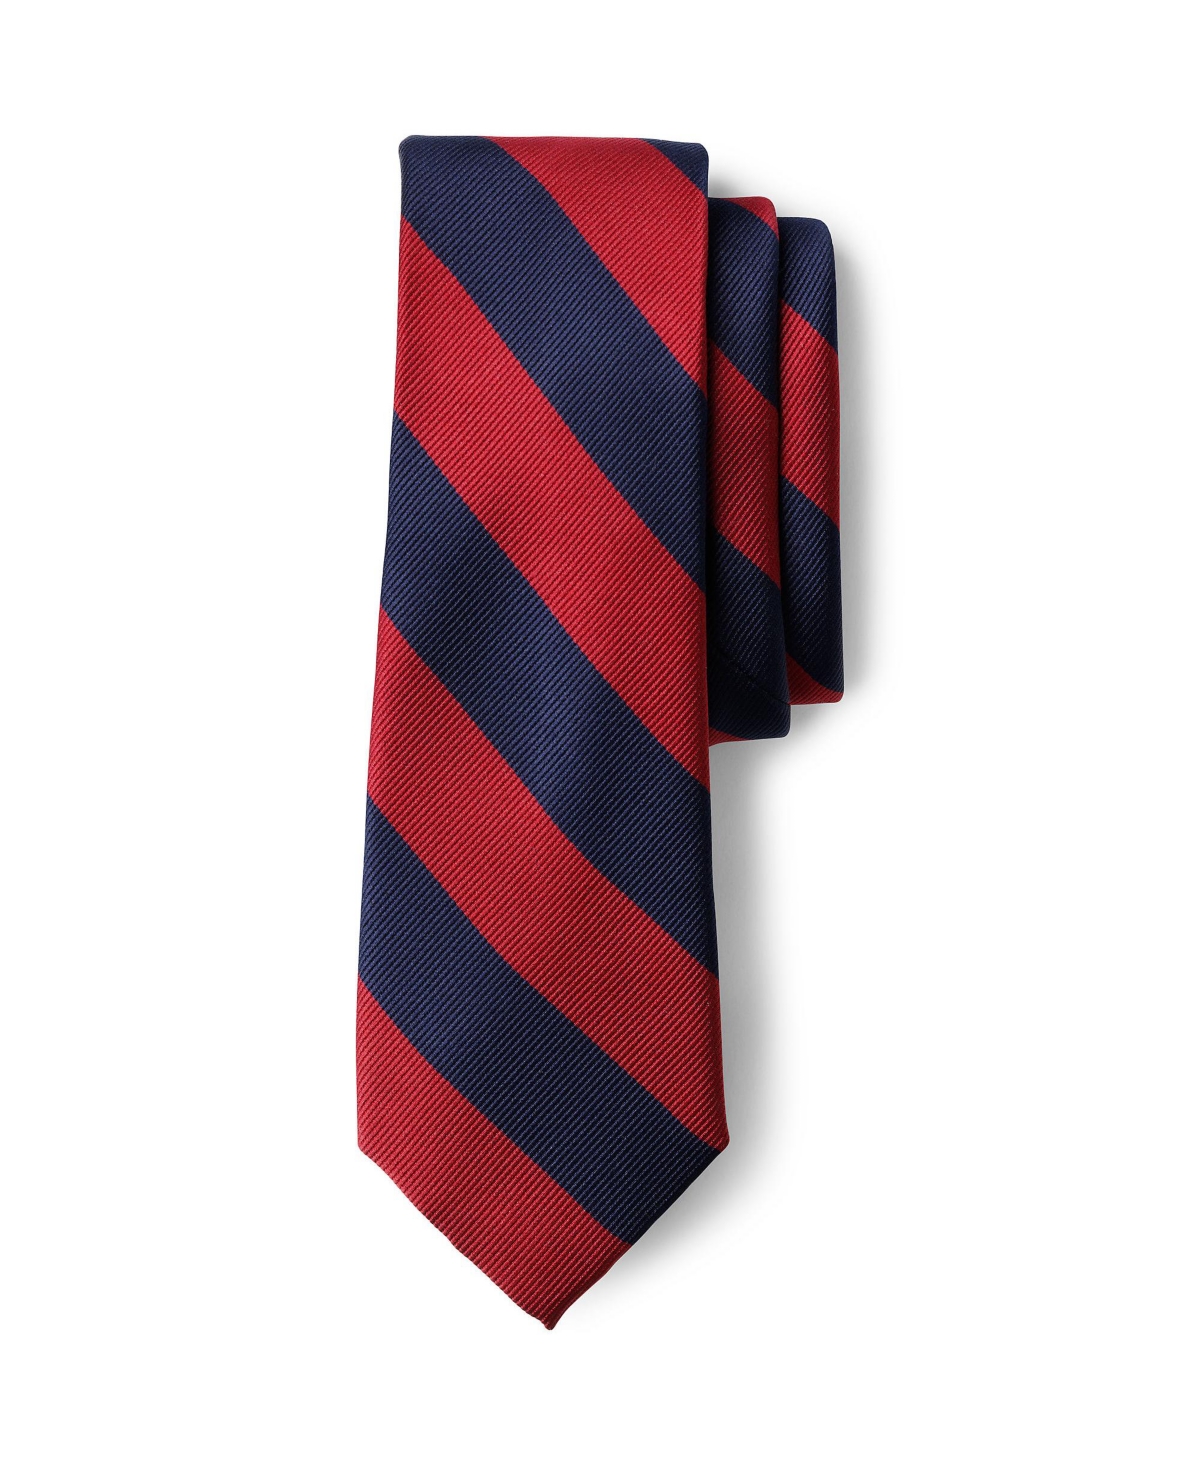 Men's School Uniform Stripe To Be Tied Tie - Burgundy/feather gray stripe